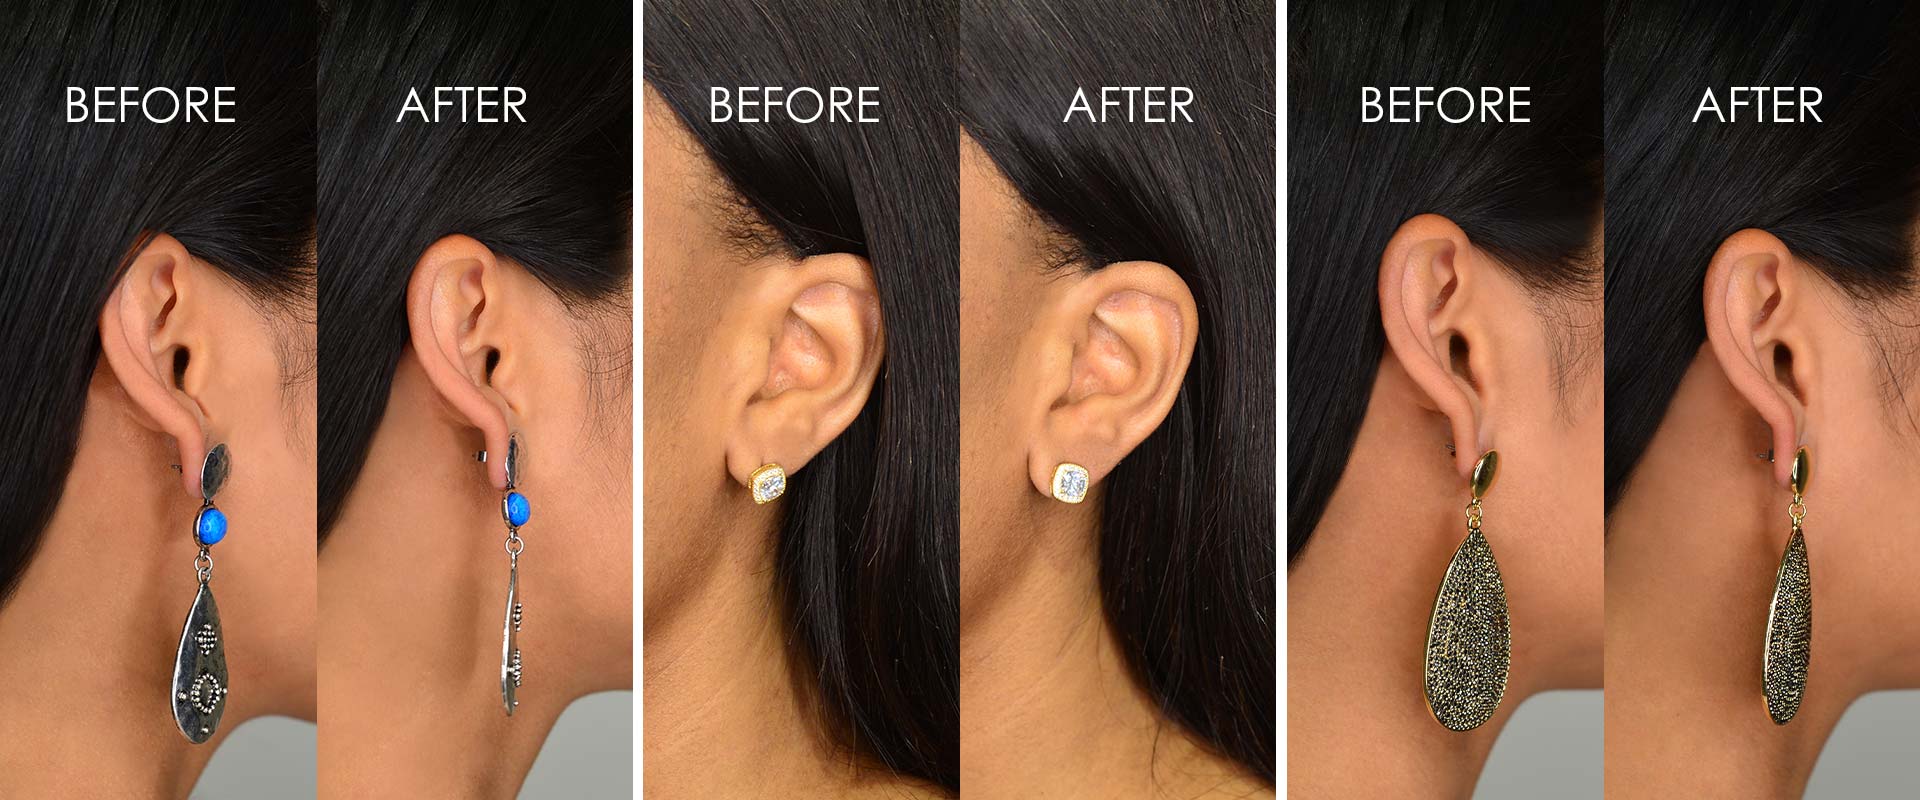 Earring Backs for Droopy Ears, Earring Lifters for Stretched Earlobes  Sterling Silver Heavy Earring Support Backs Adjustable Secure Earring Backs  for Heavy Earrings Diamond Studs 